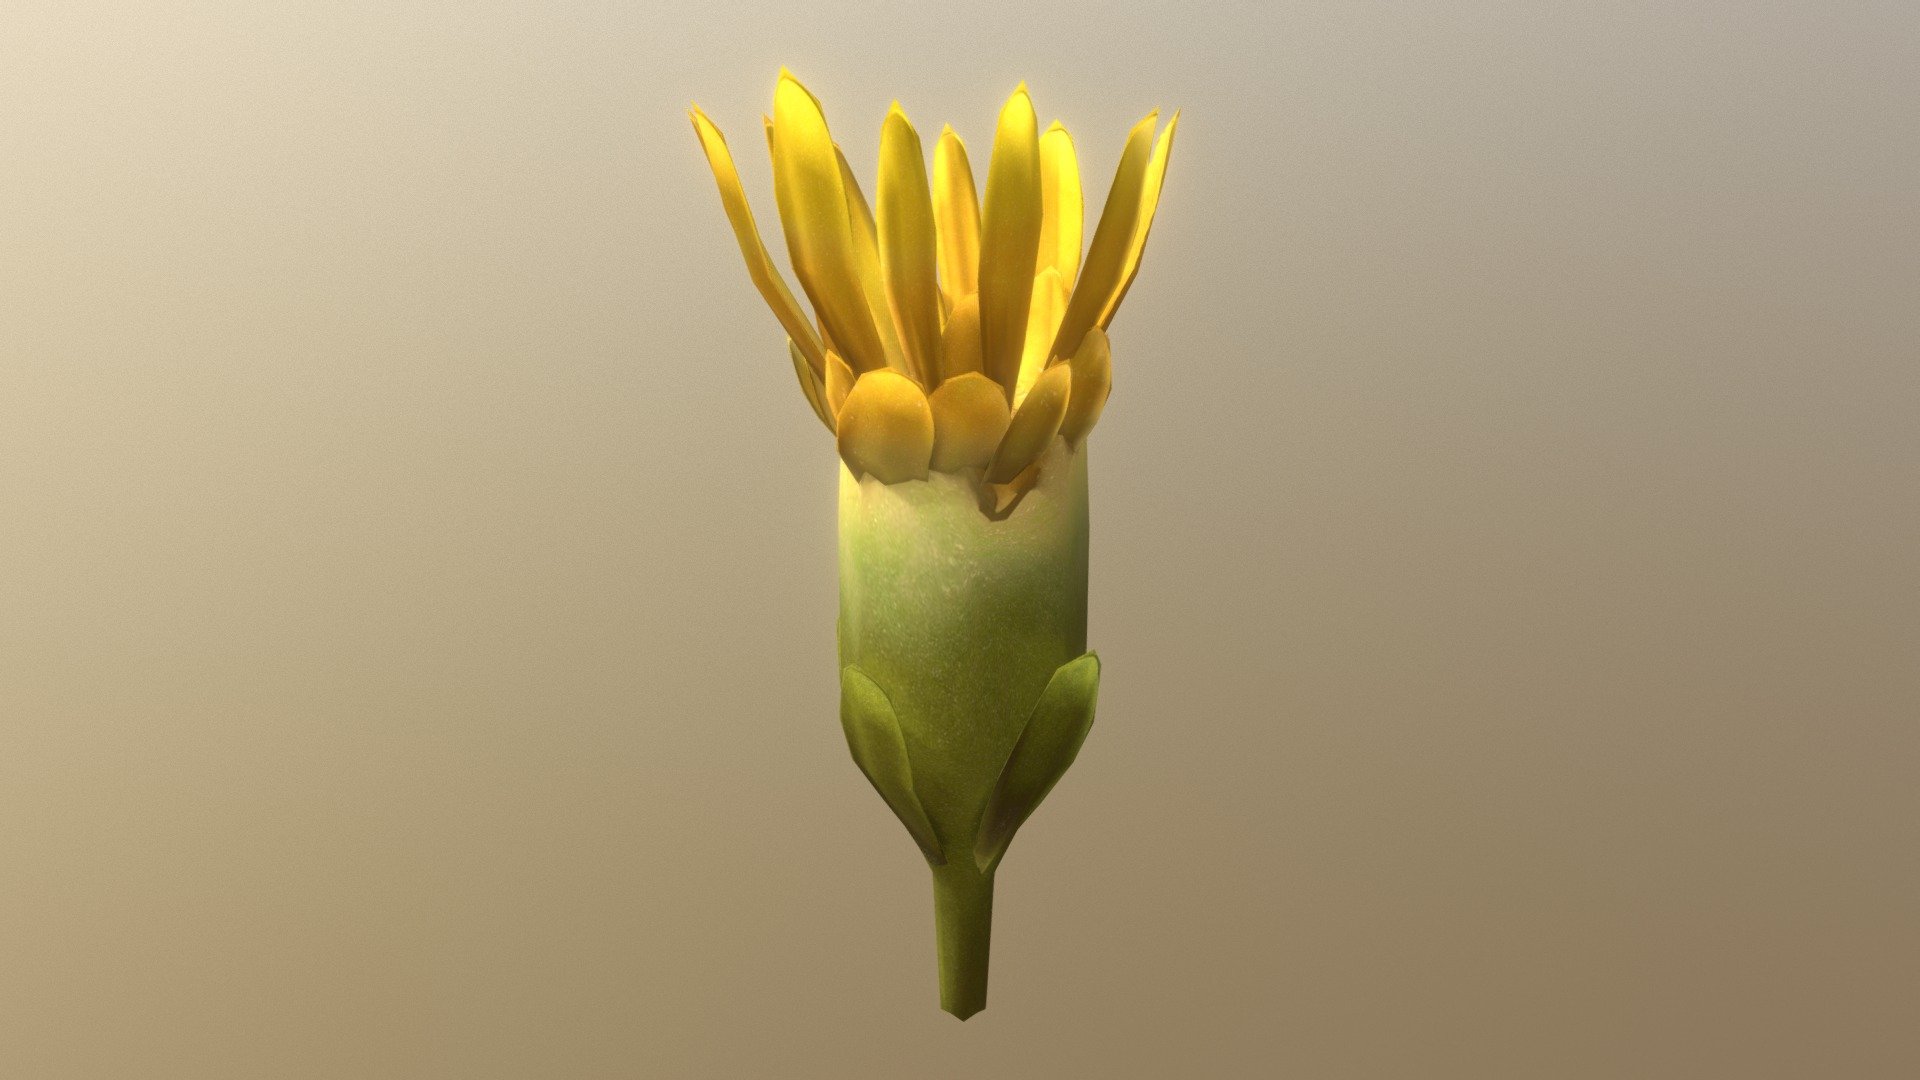 Blender and Sbstace Painter - Goldenrod Blossom - Buy Royalty Free 3D model by Anežka Hájková (@anezka) 3d model